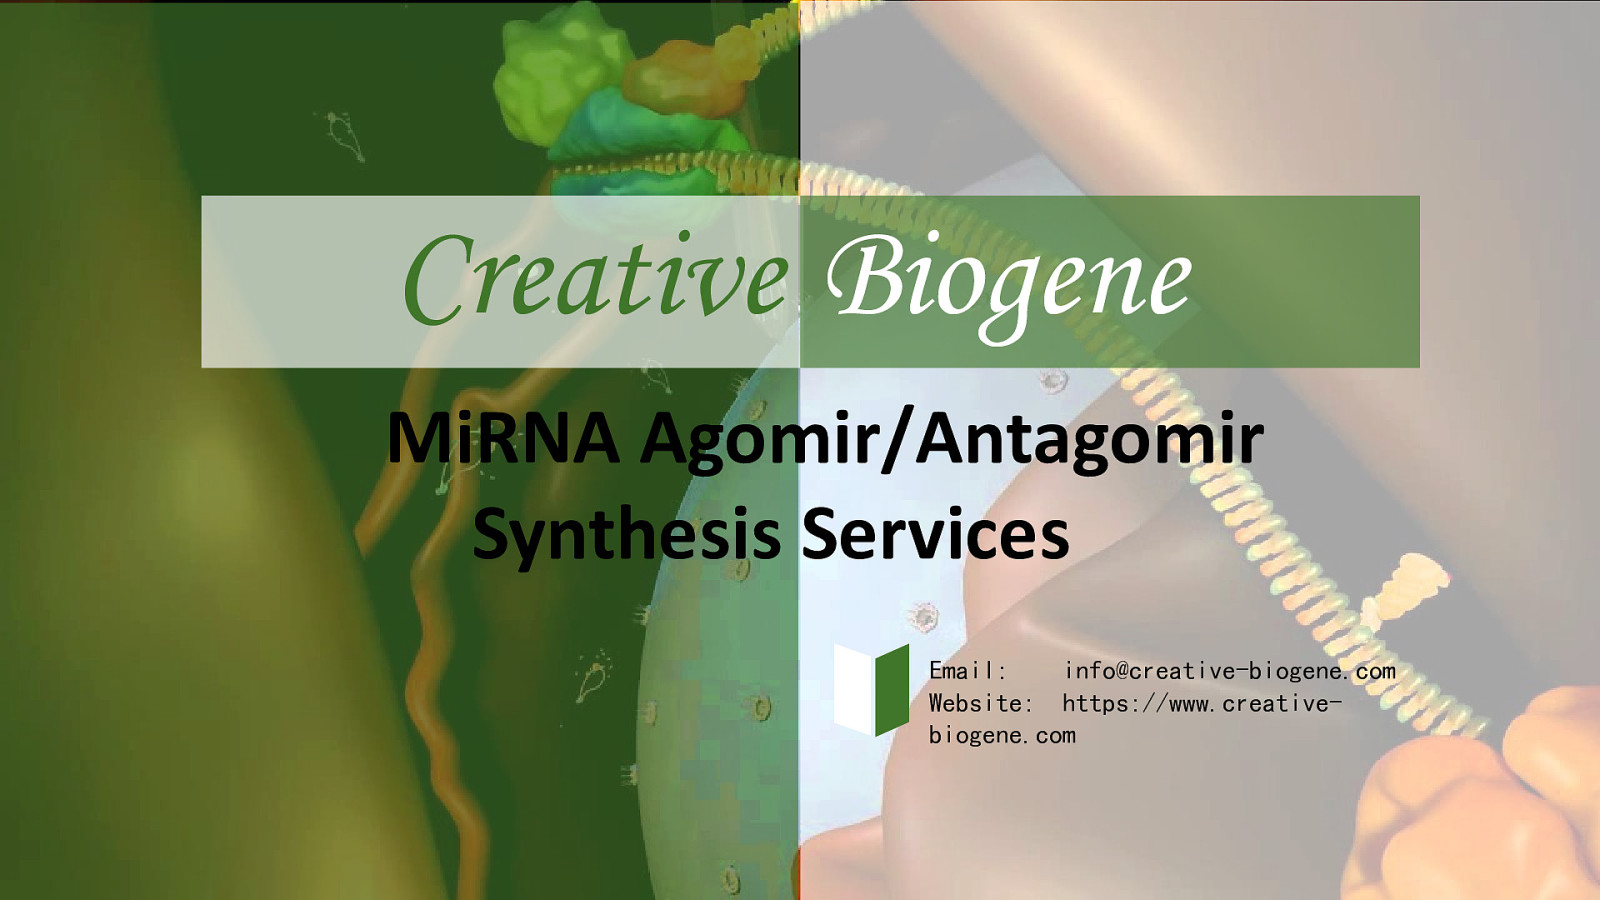 MicroRNA Agomir